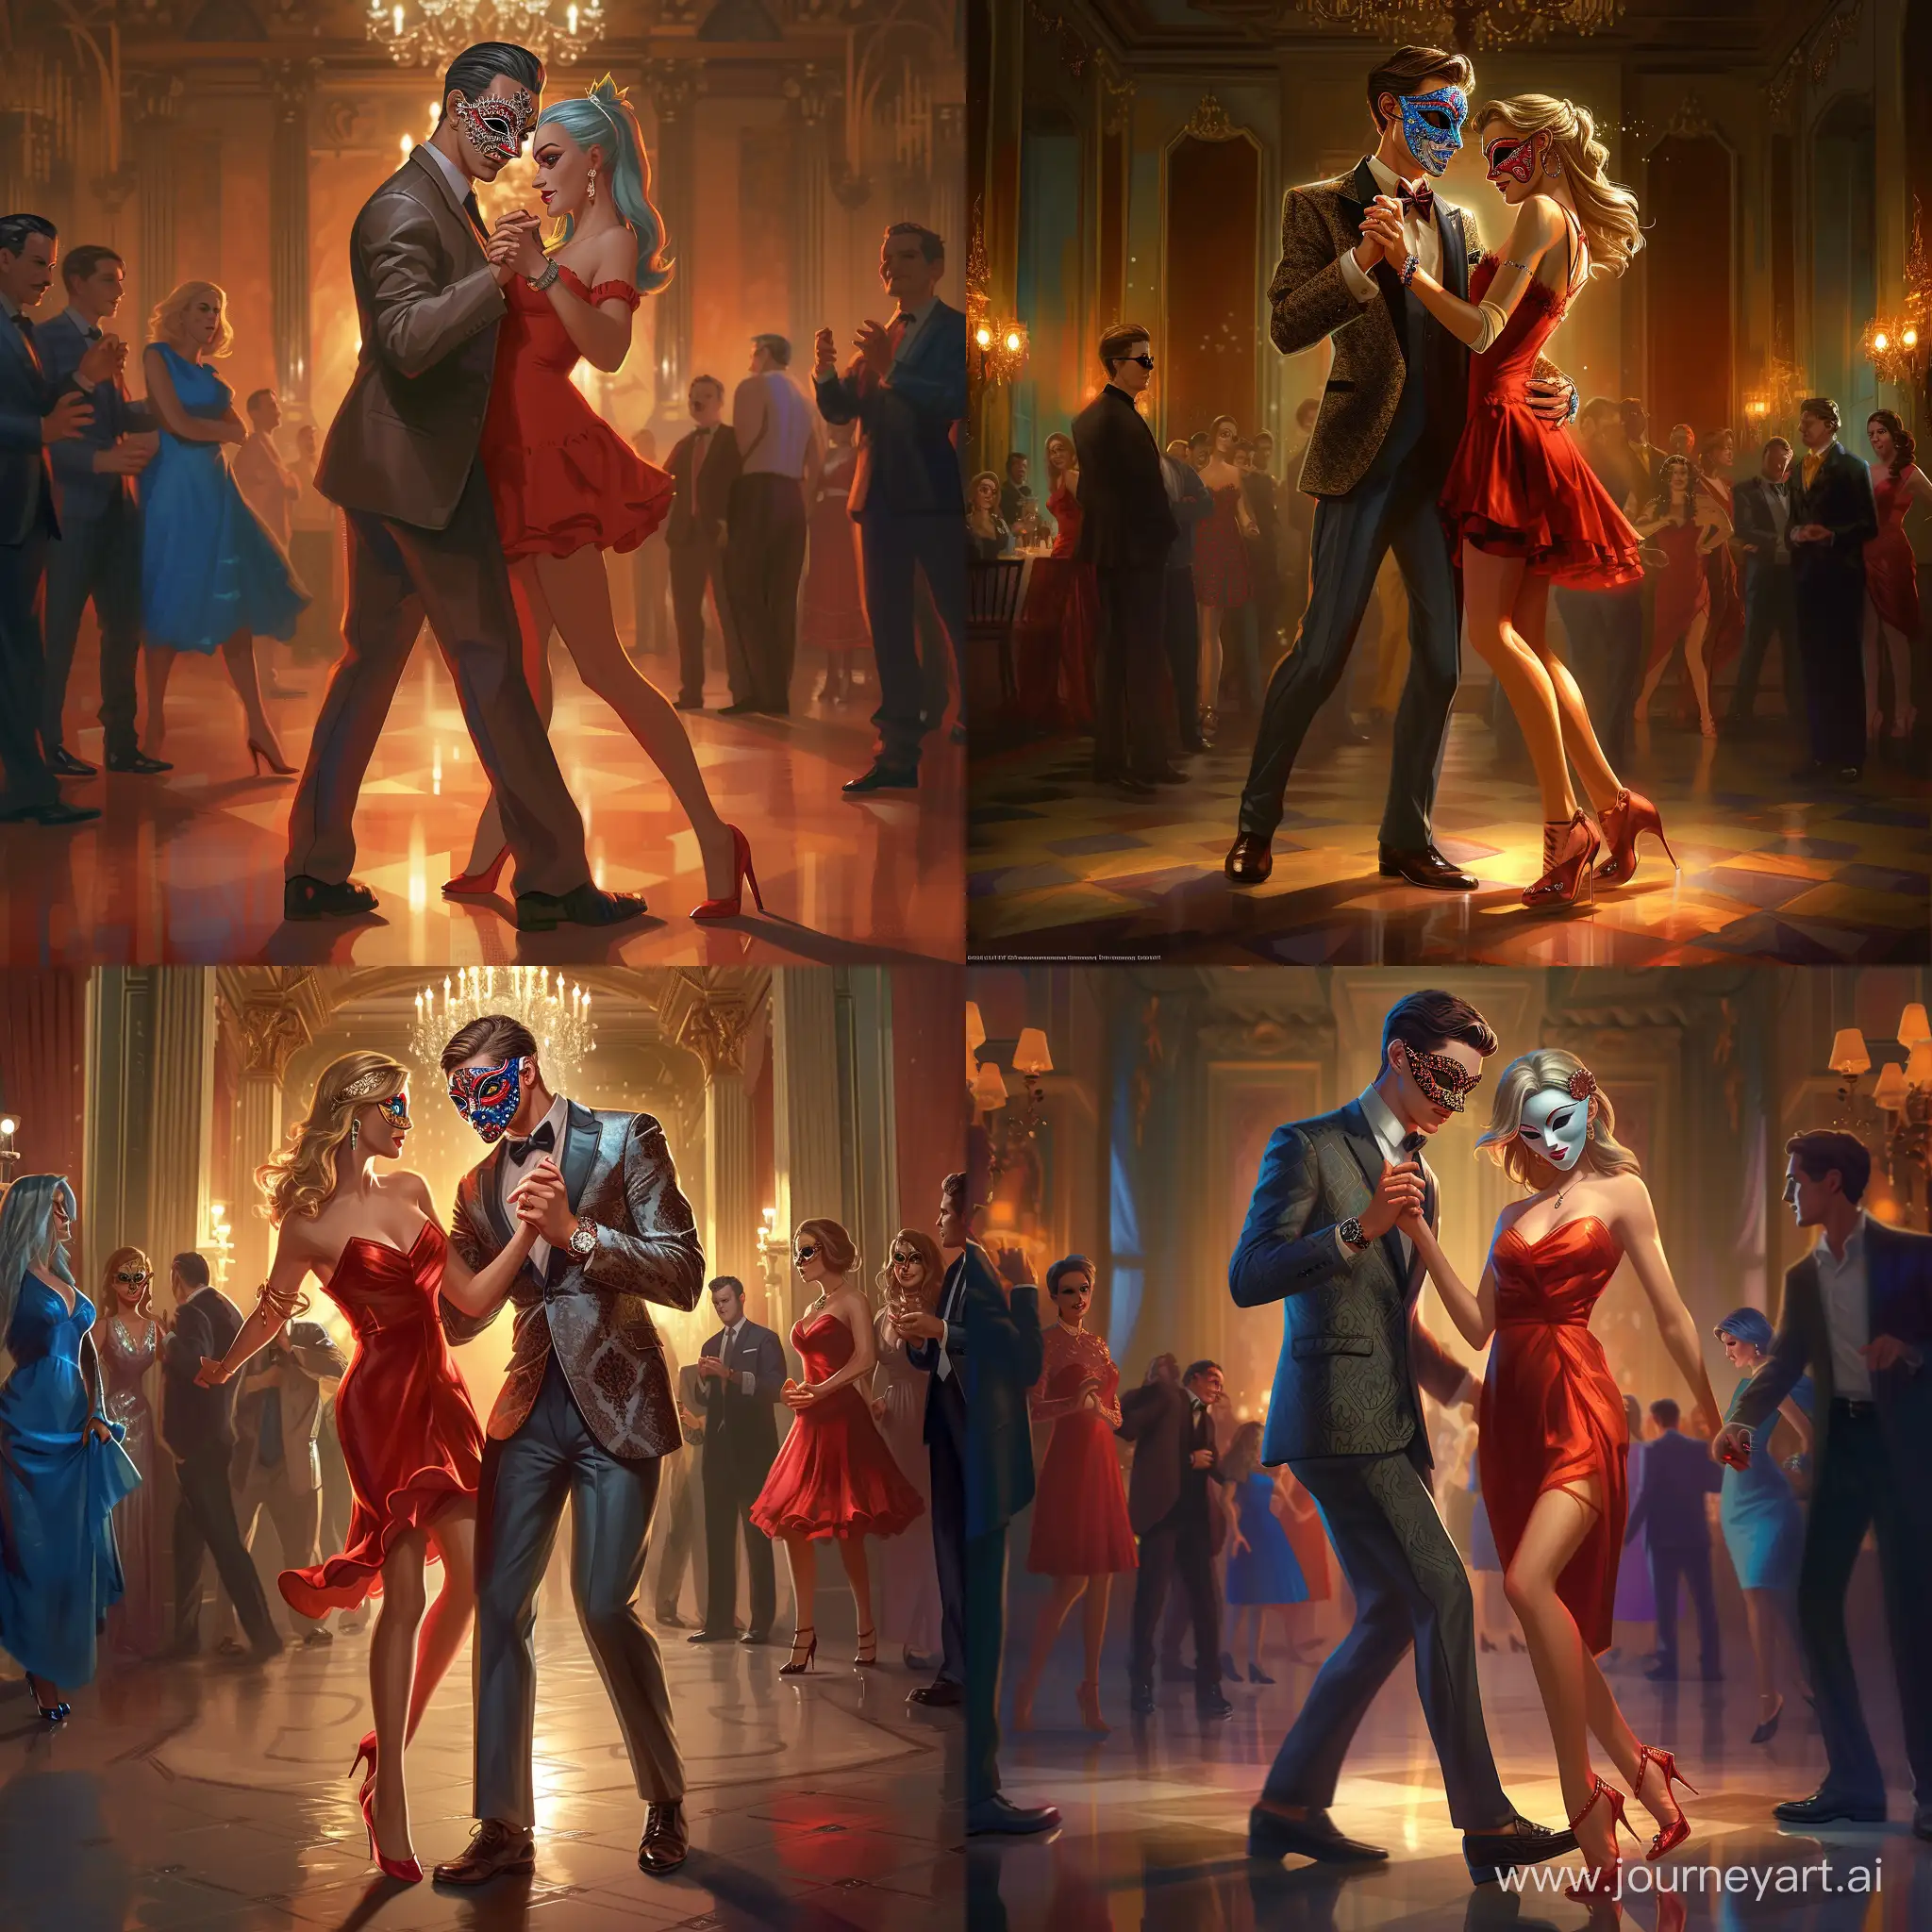 Elegant-Ballroom-Dance-Mystery-and-Romance-in-Dimly-Lit-Atmosphere